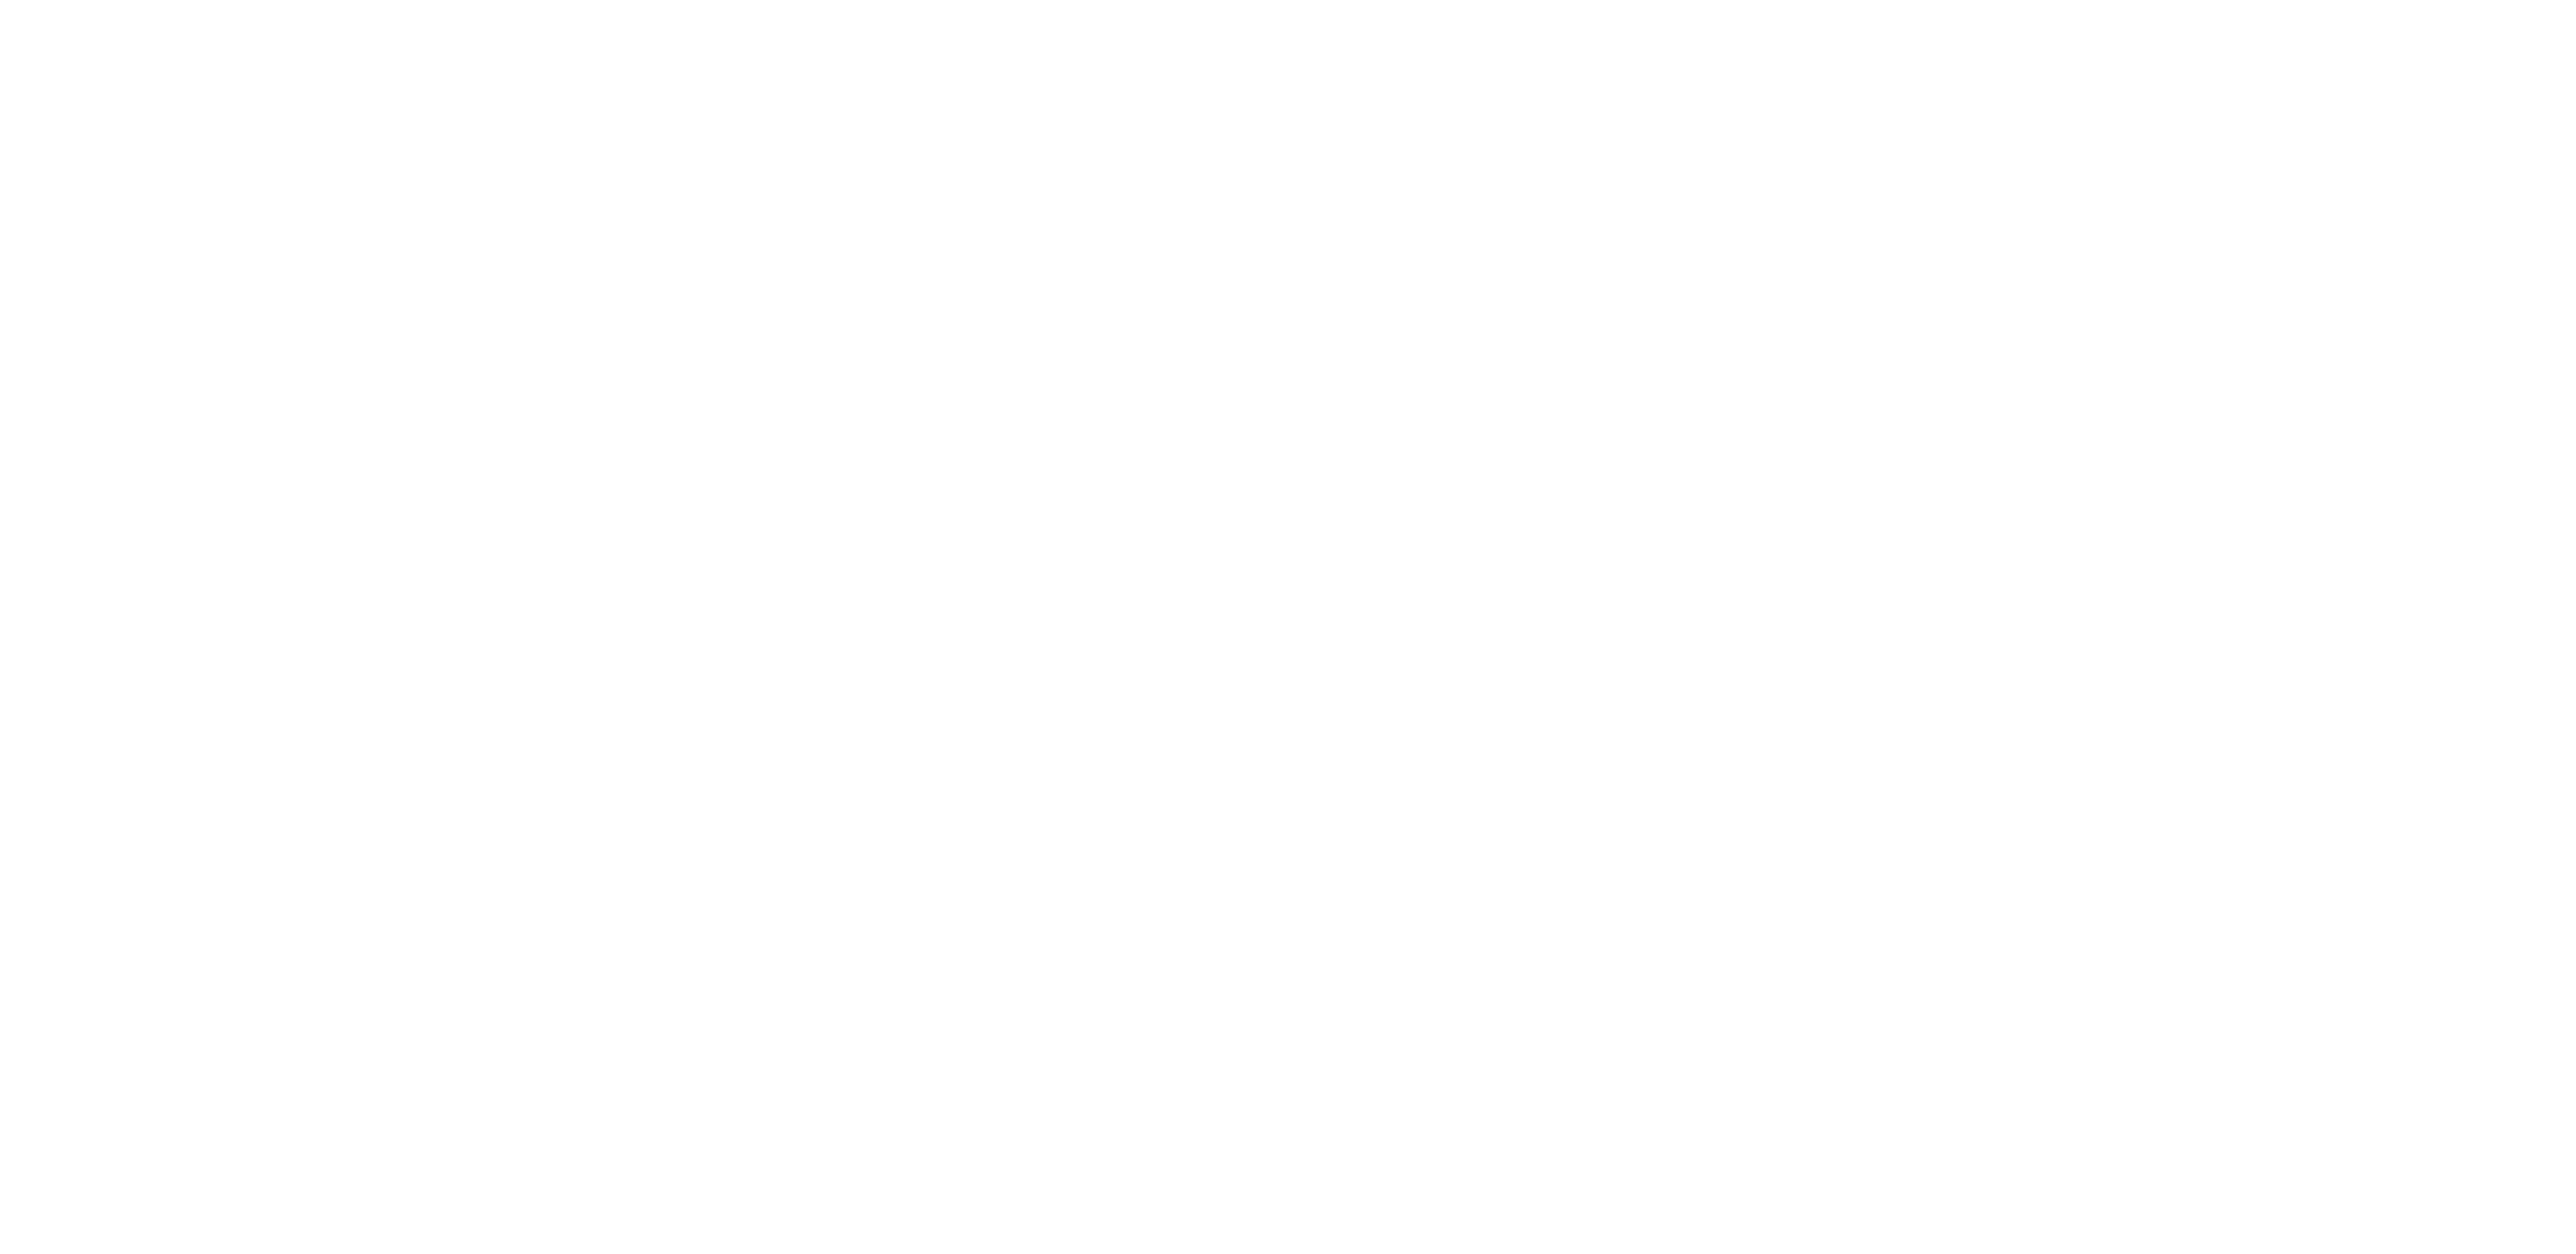 Franklin Road Baptist Church • Murfreesboro, Tennessee